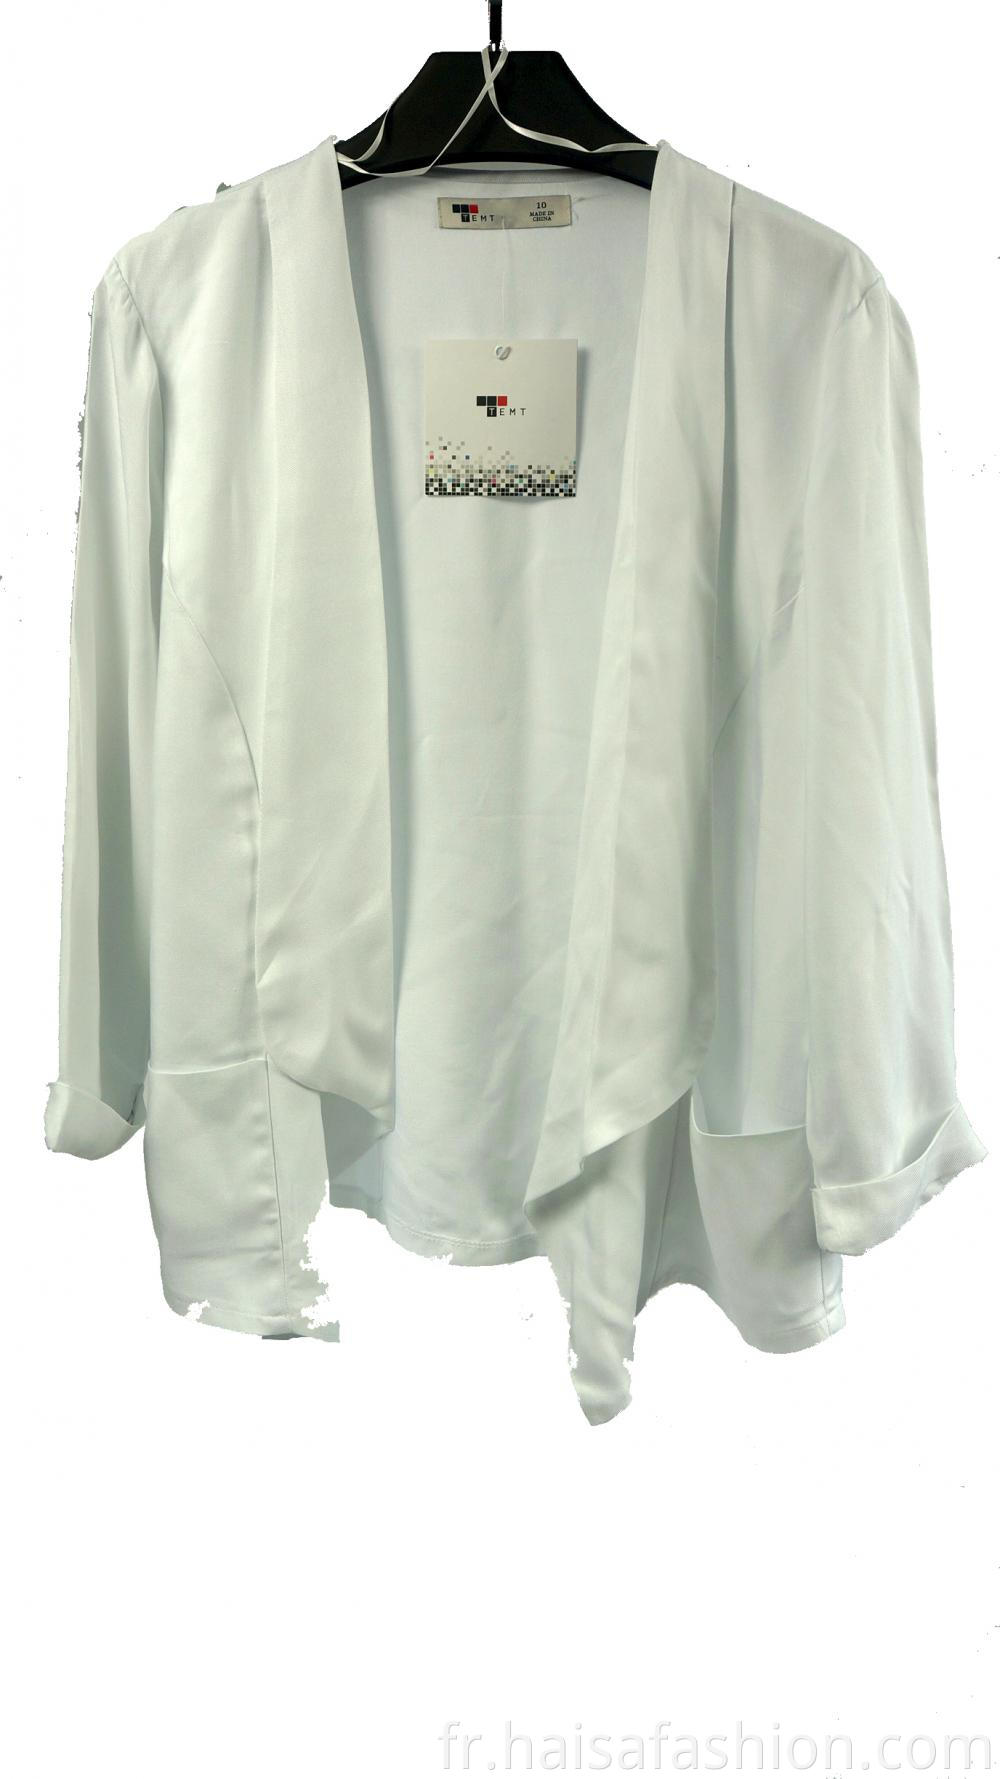 Women's White Long-Sleeved Shirts